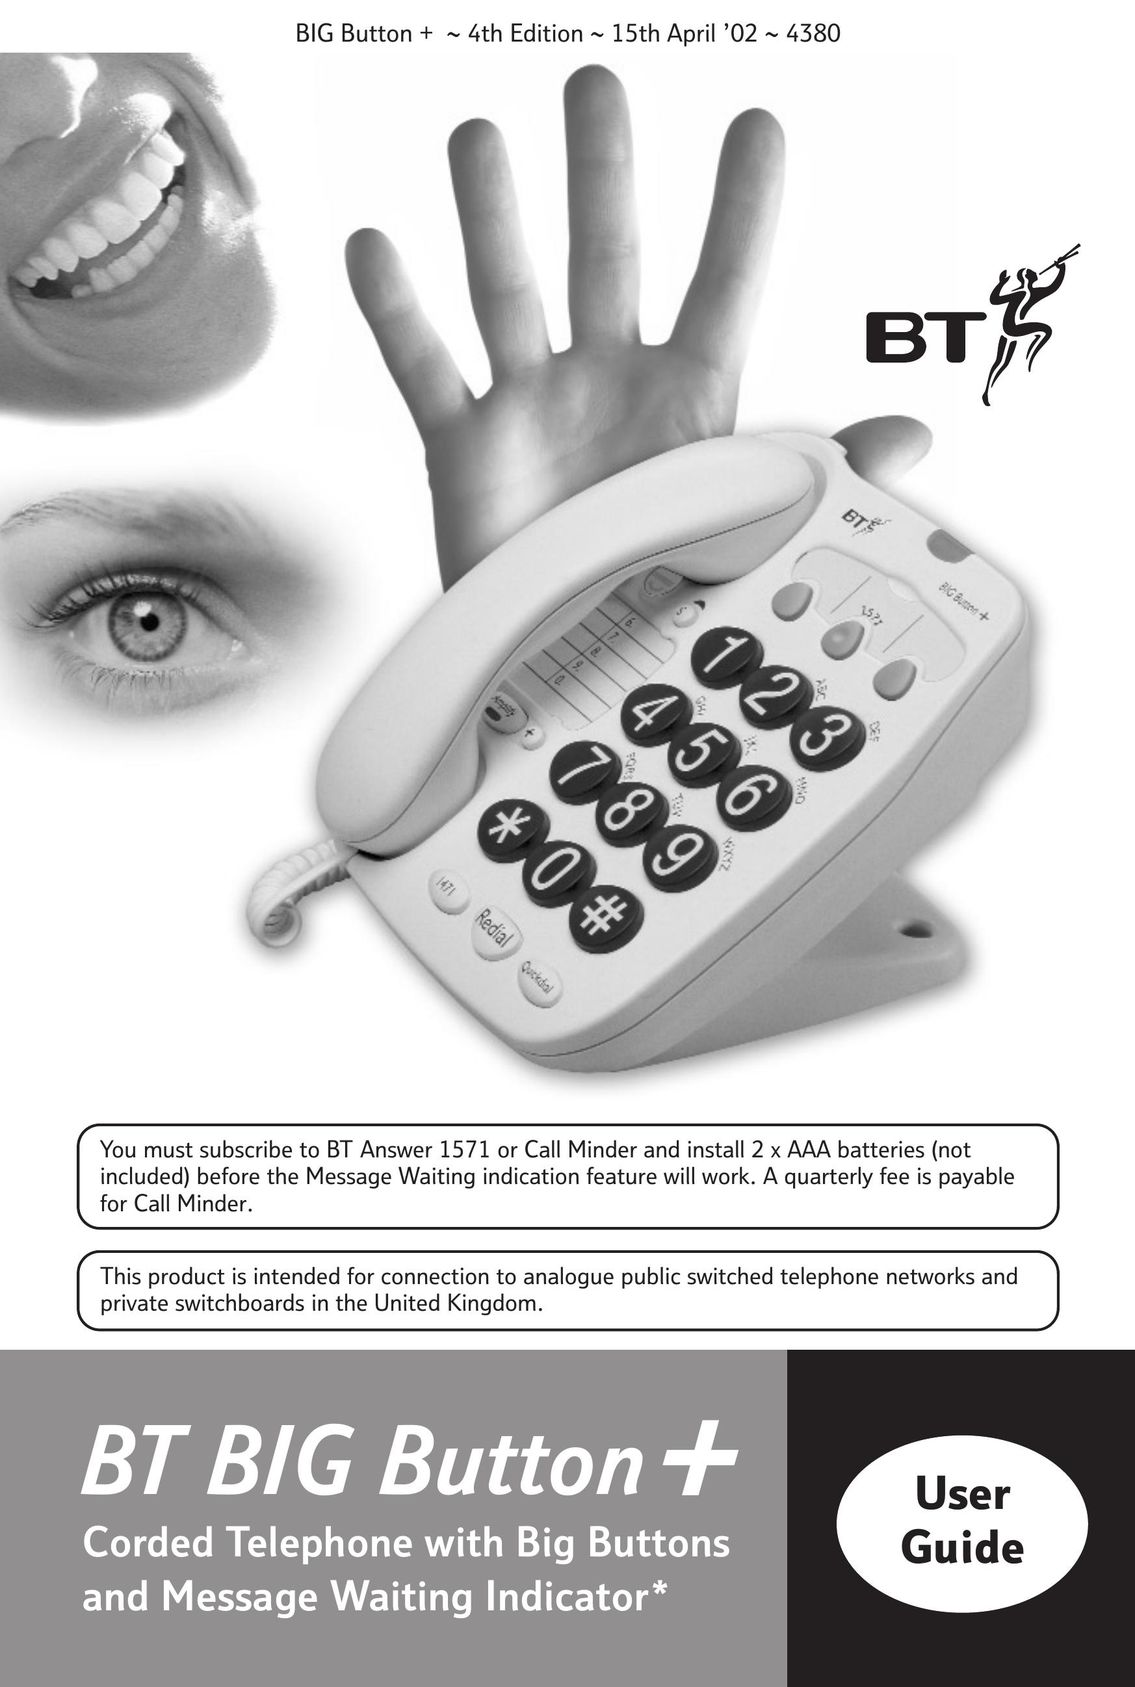 BT BIG Button + Telephone User Manual